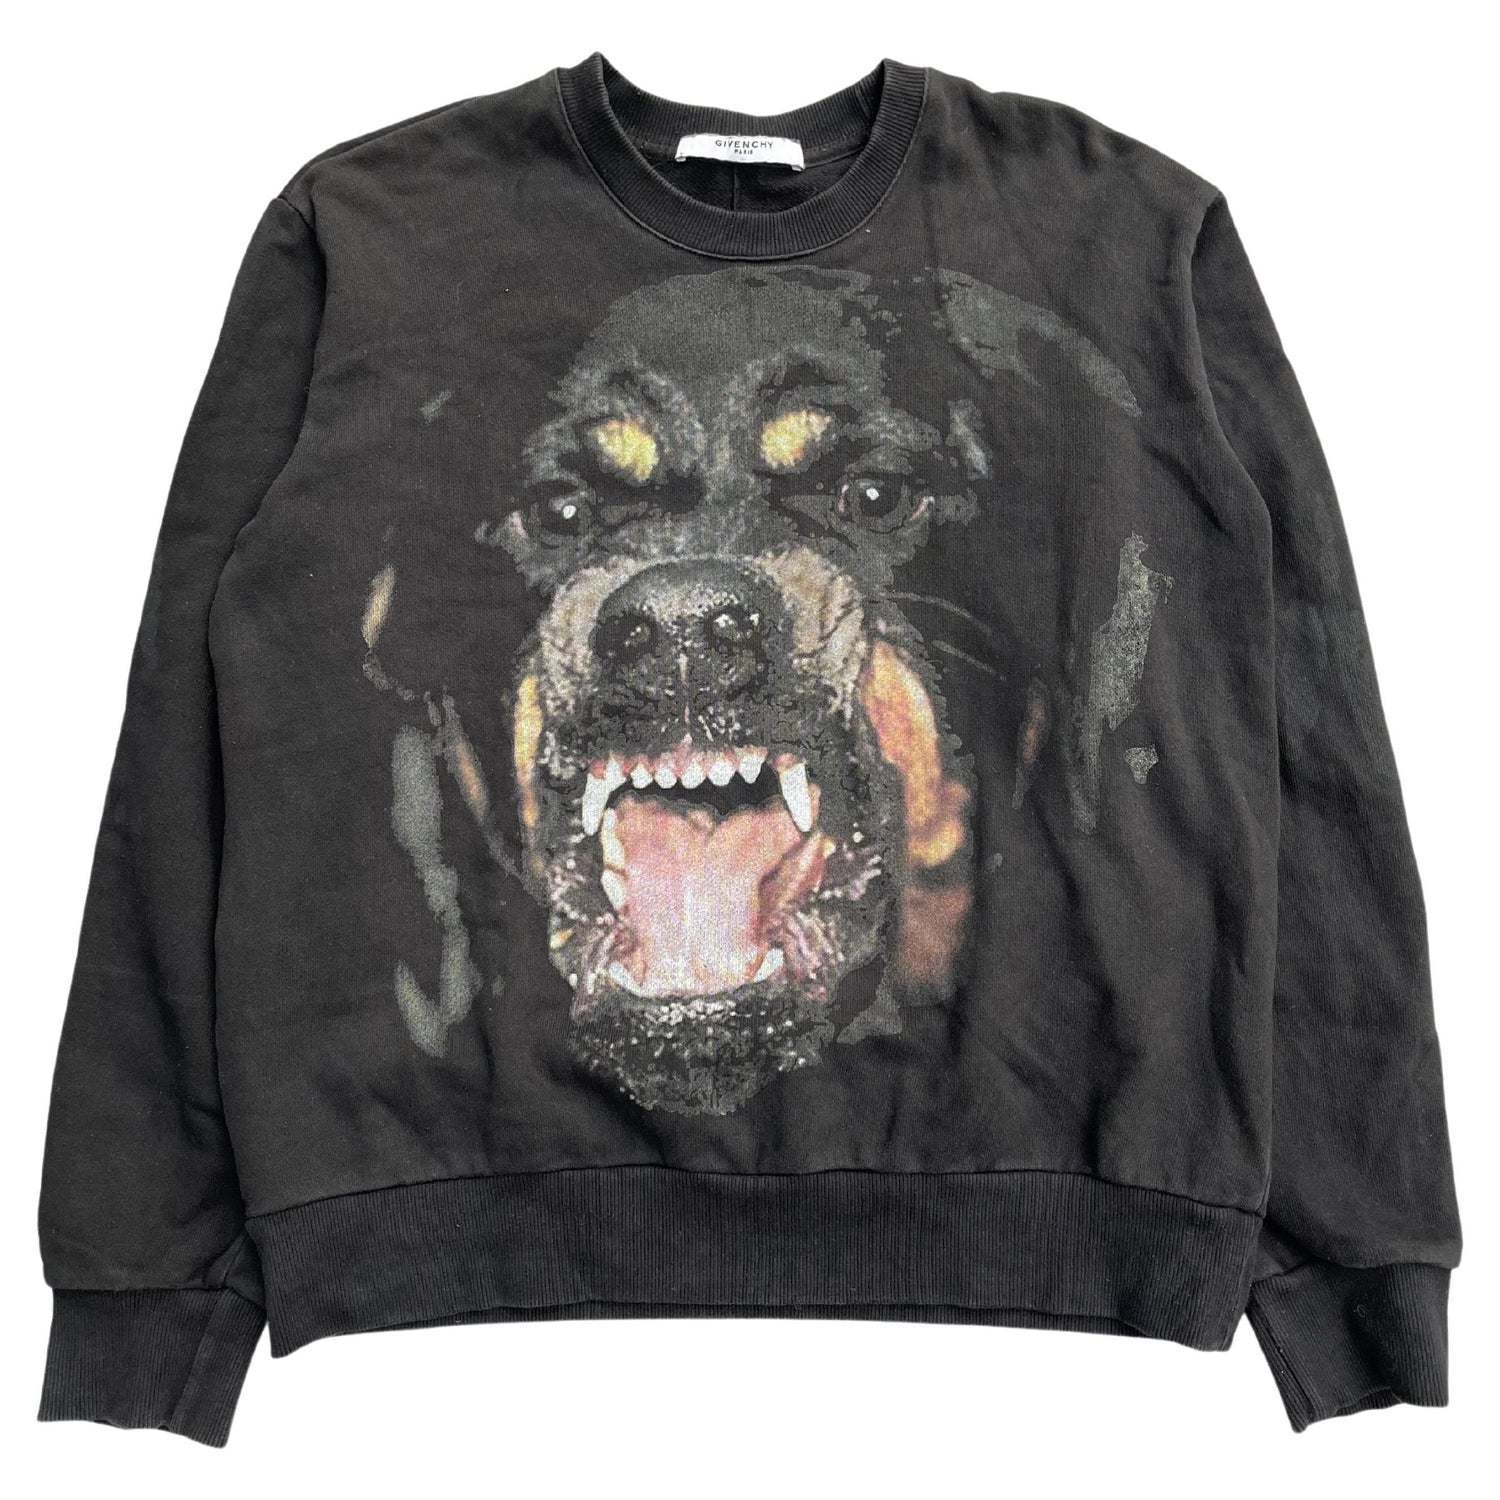 Givenchy Rottweiler Sweatshirt - For Sale | givenchy rottweiler jumper, givenchy rottweiler sweater, givenchy dog